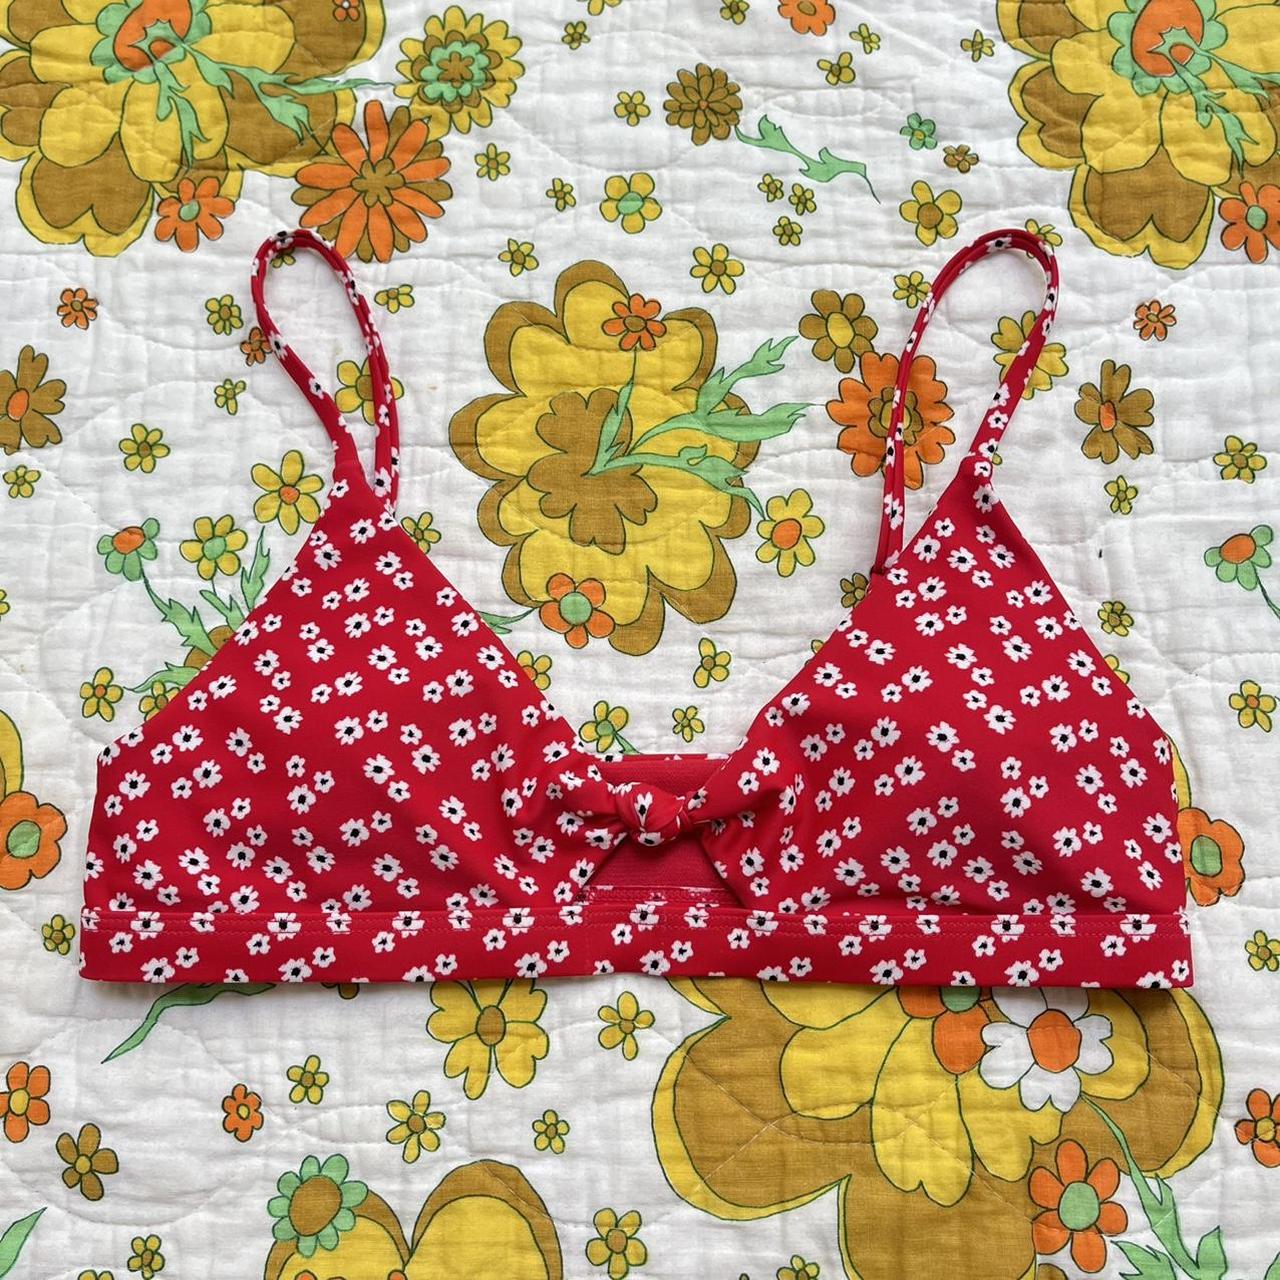 Product Image 1 - Red and white daisy bikini